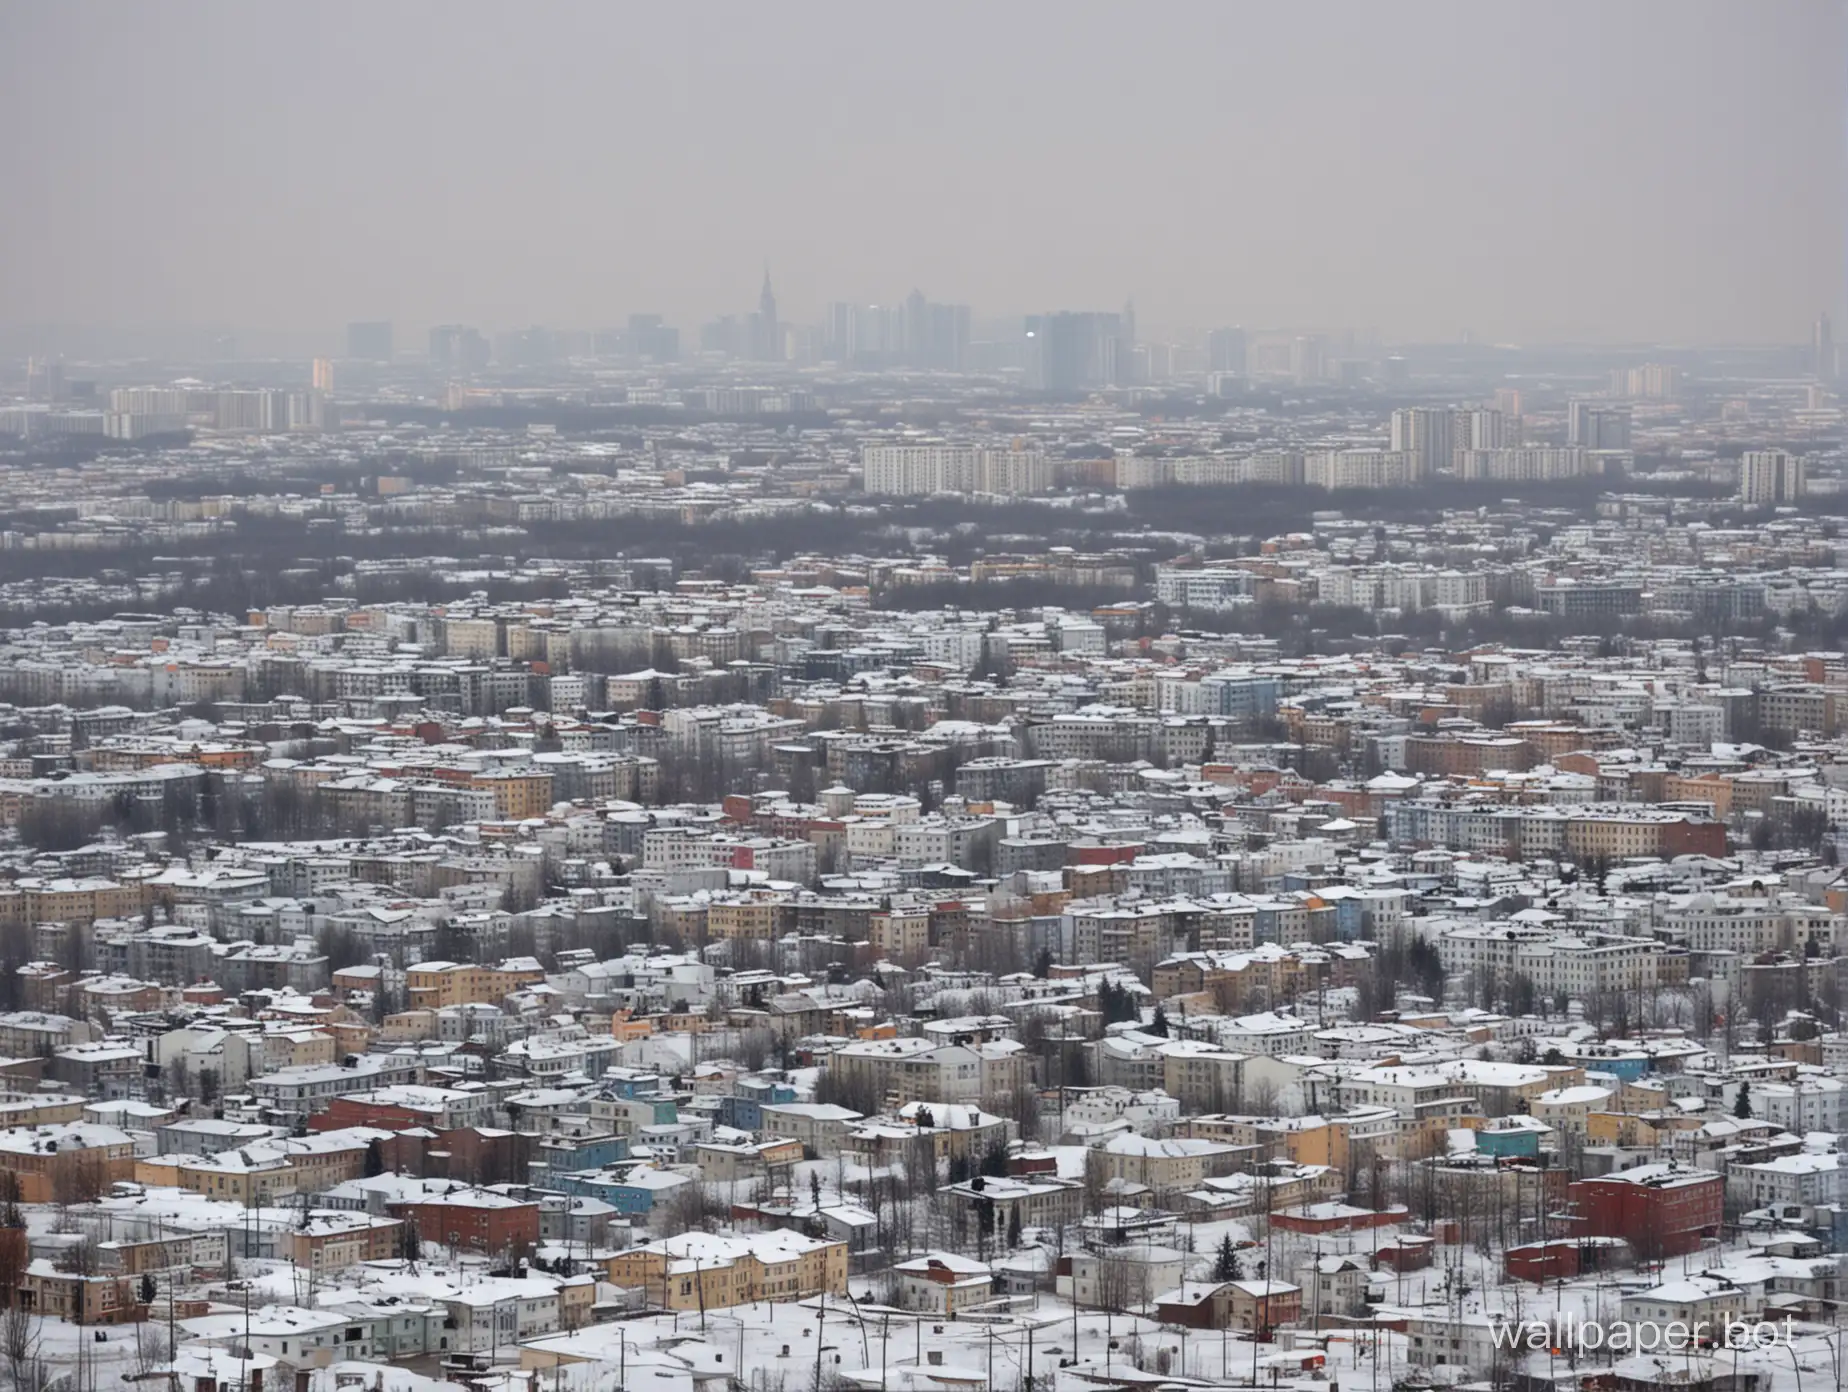 Russian city in 2010
